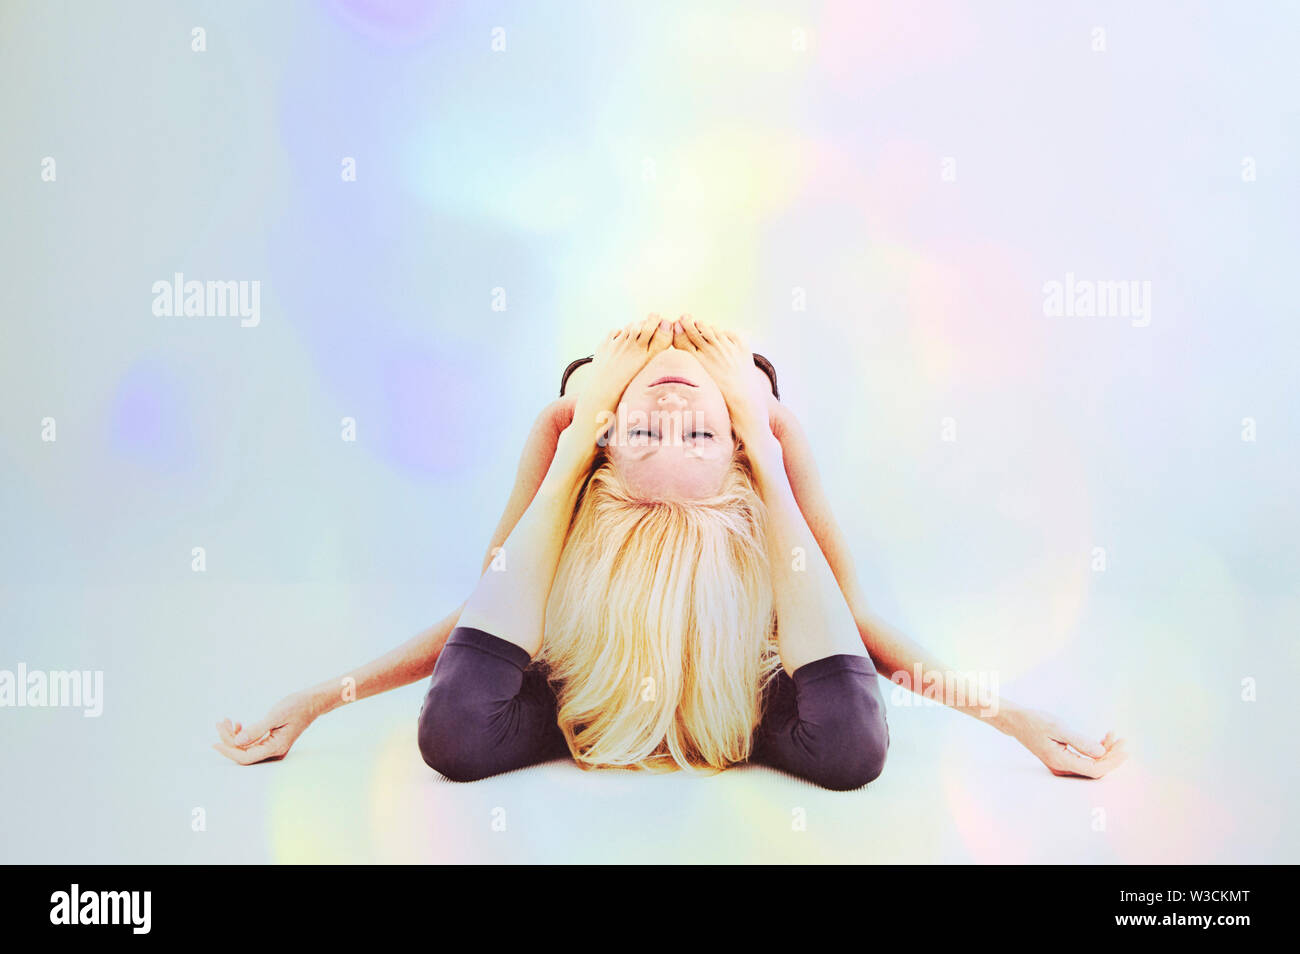 Advanced Yoga Practitioner Woman in Extreme Yoga Pose Stock Photo - Alamy